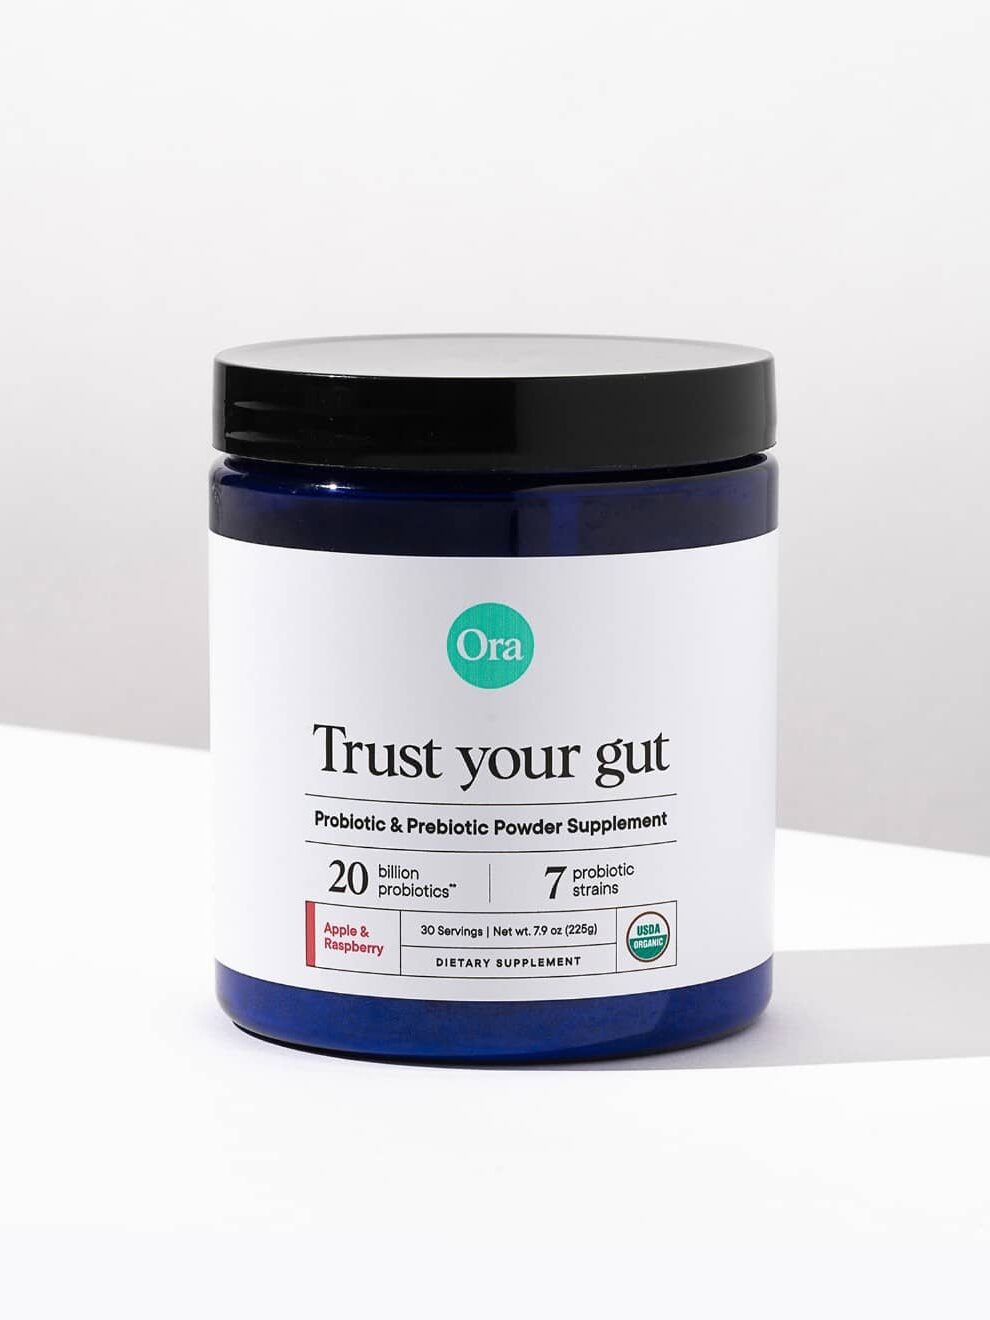 A container of Ora Trust Your Gut probiotics.